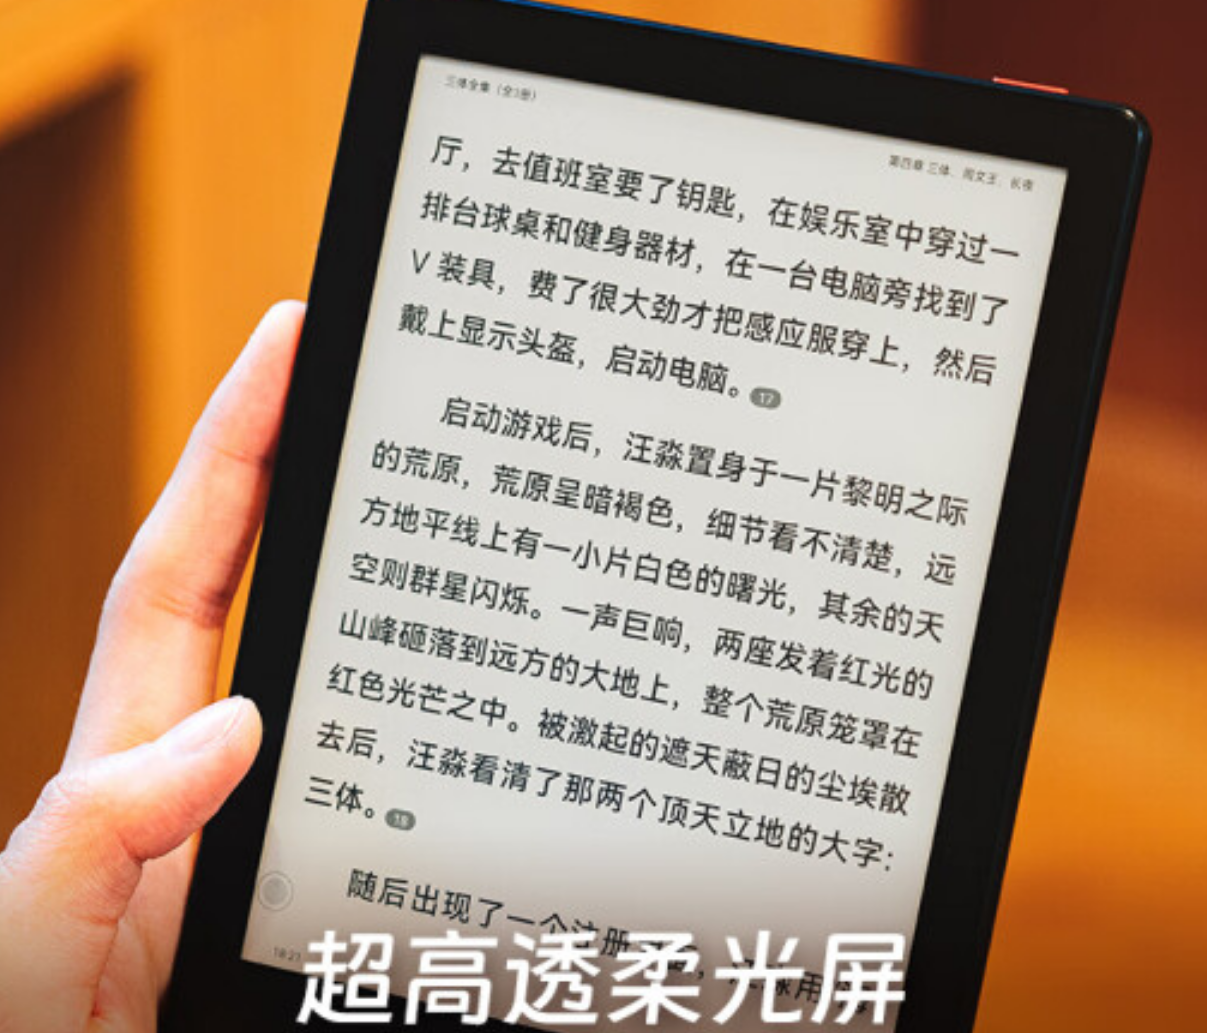 iReader Neo e-reader with English